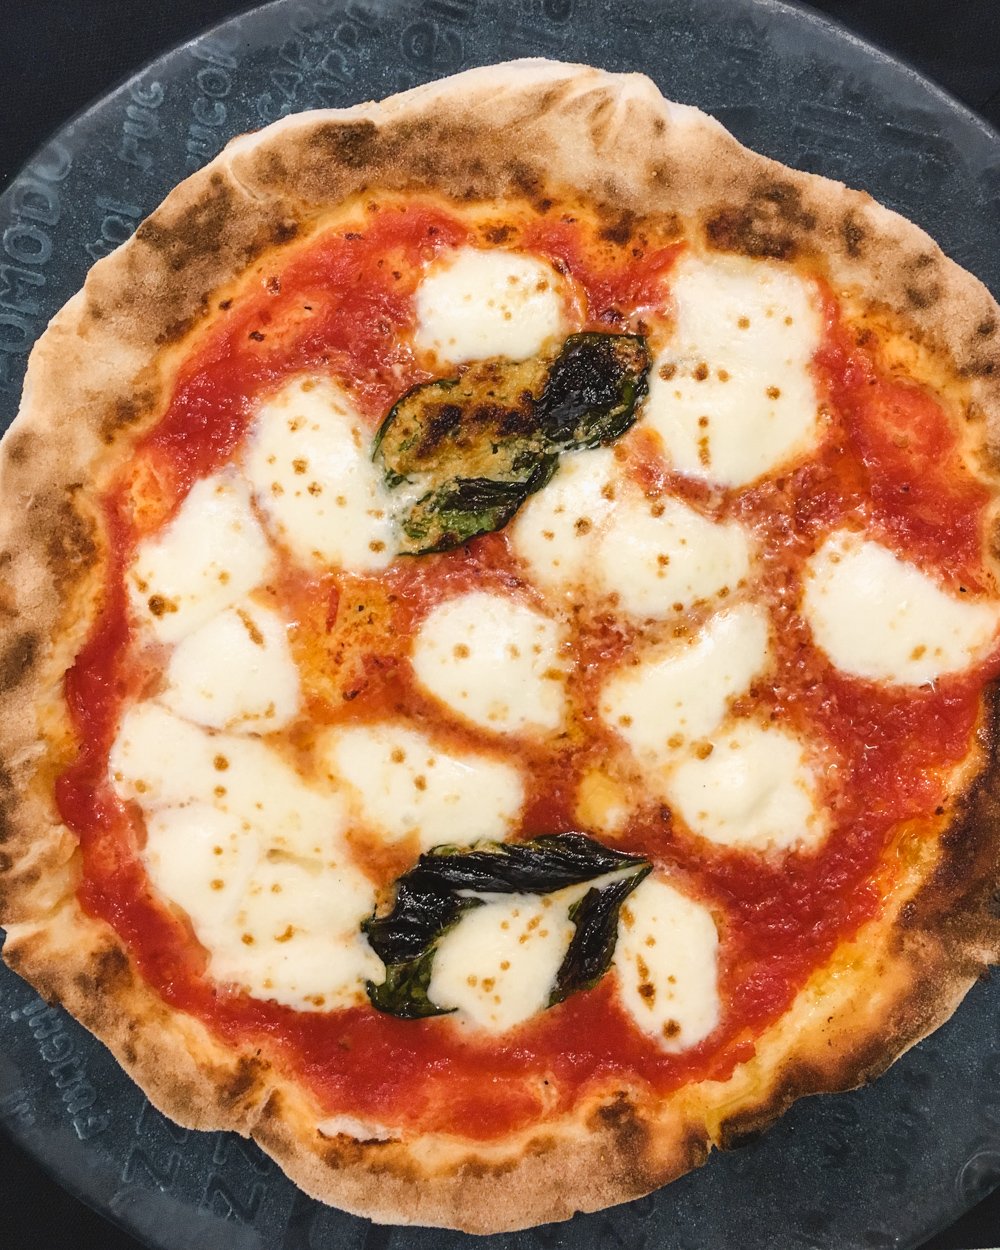 Gluten Free Pizza in Naples. Starita